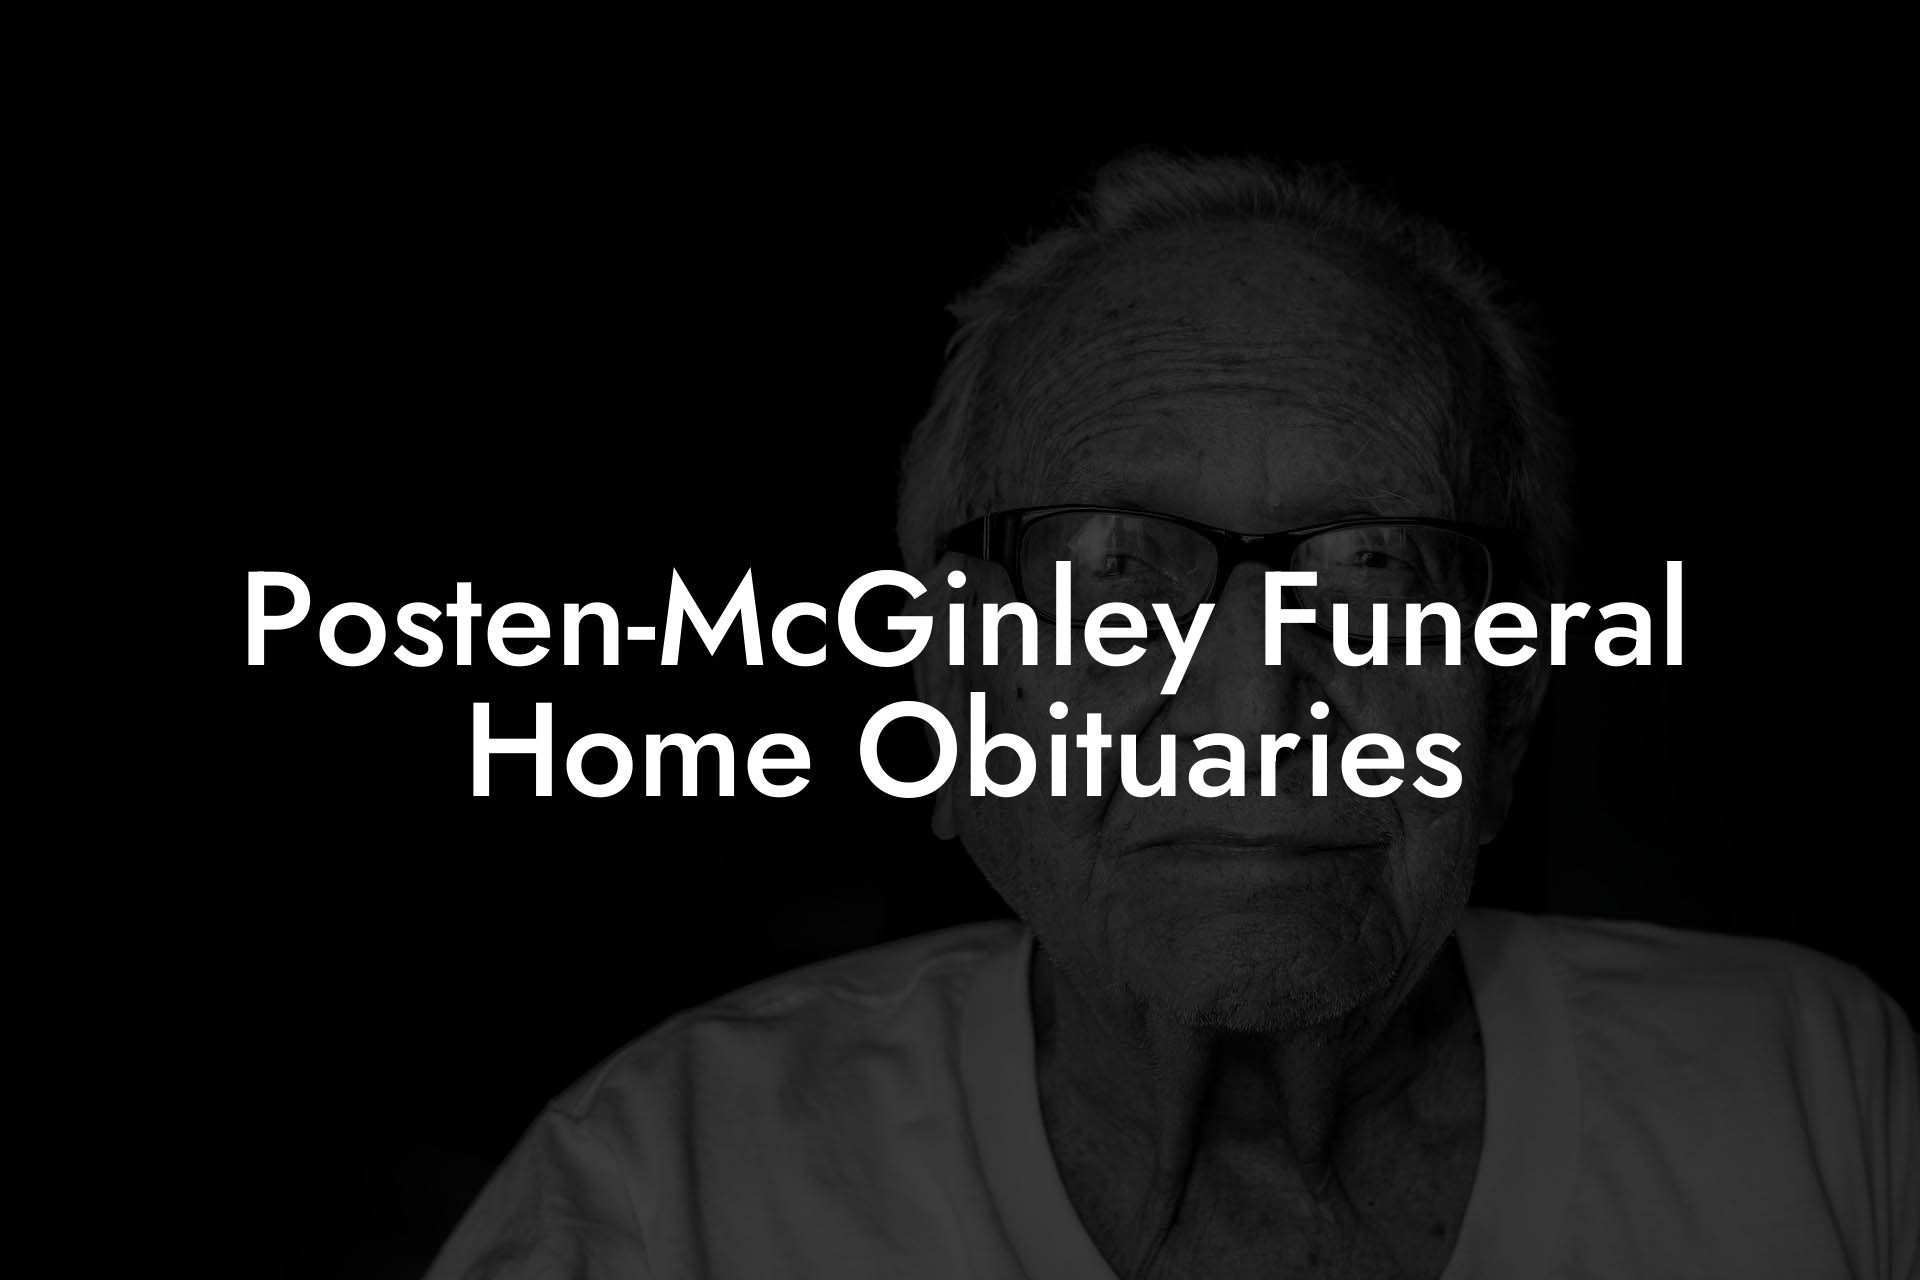 Posten-McGinley Funeral Home Obituaries